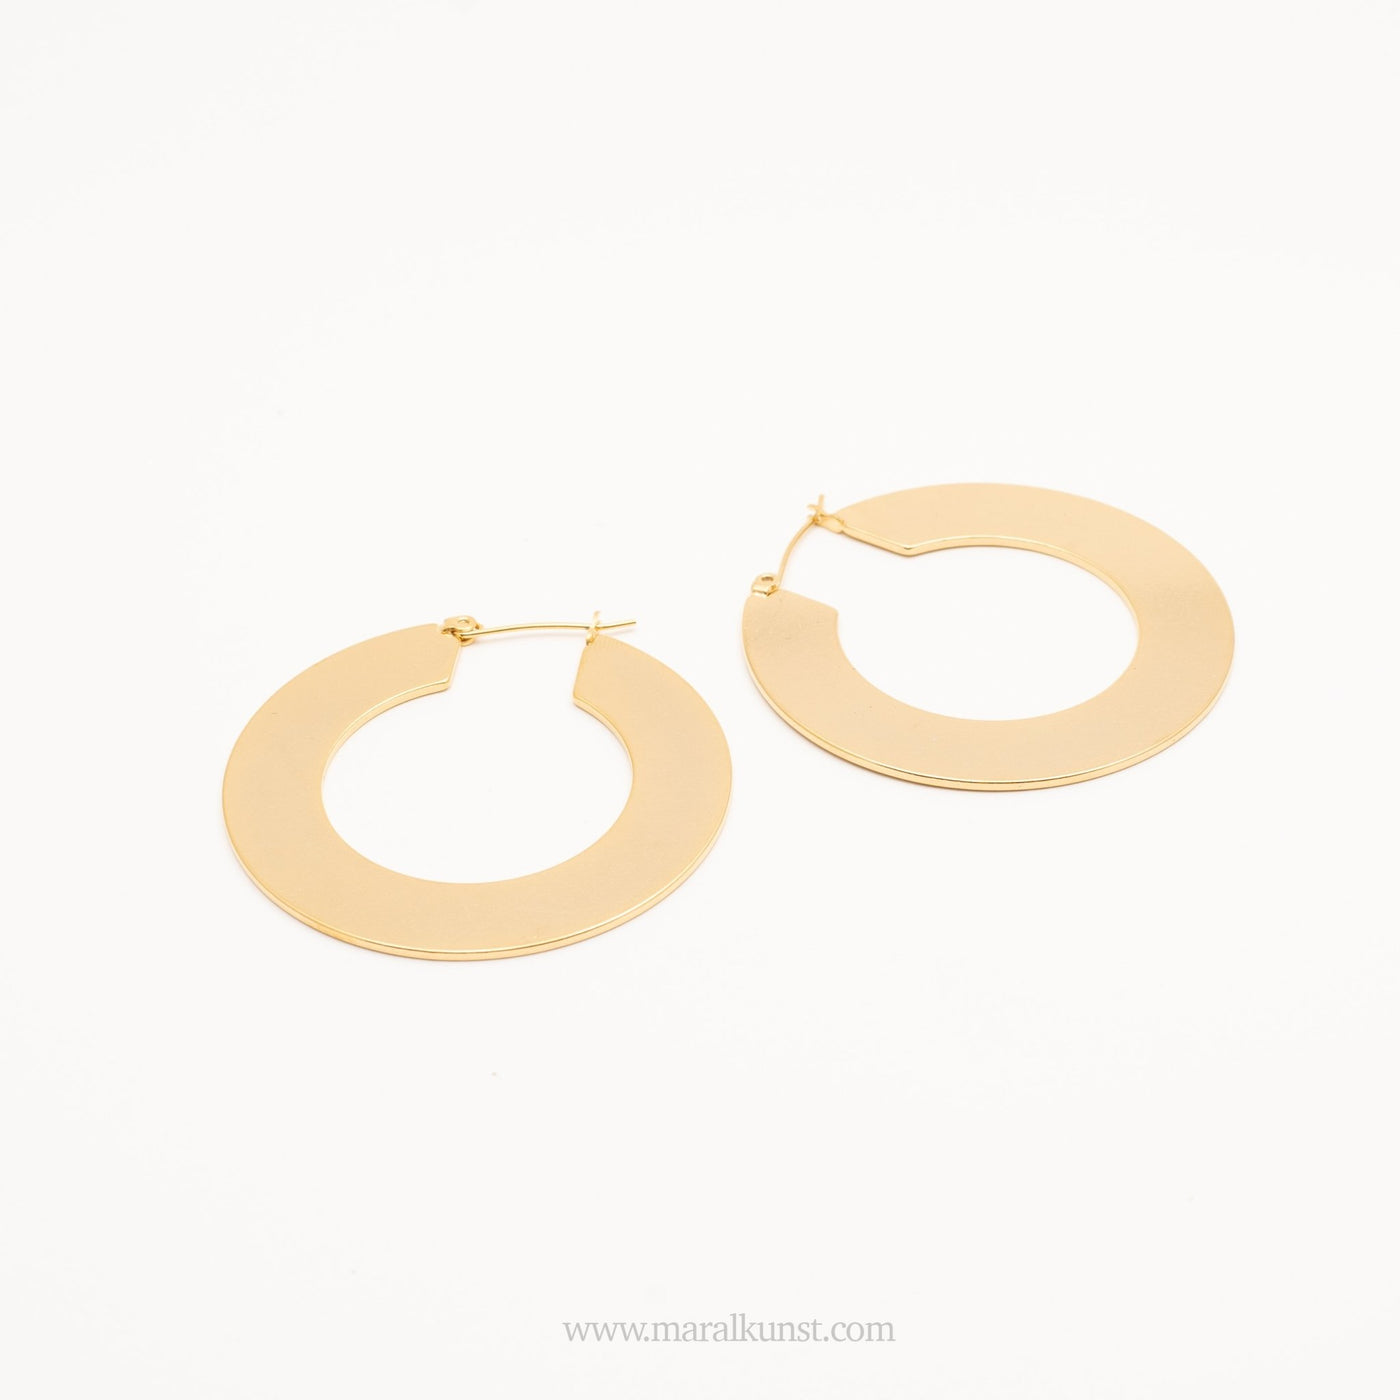 Ariana Earrings - Maral Kunst Jewelry